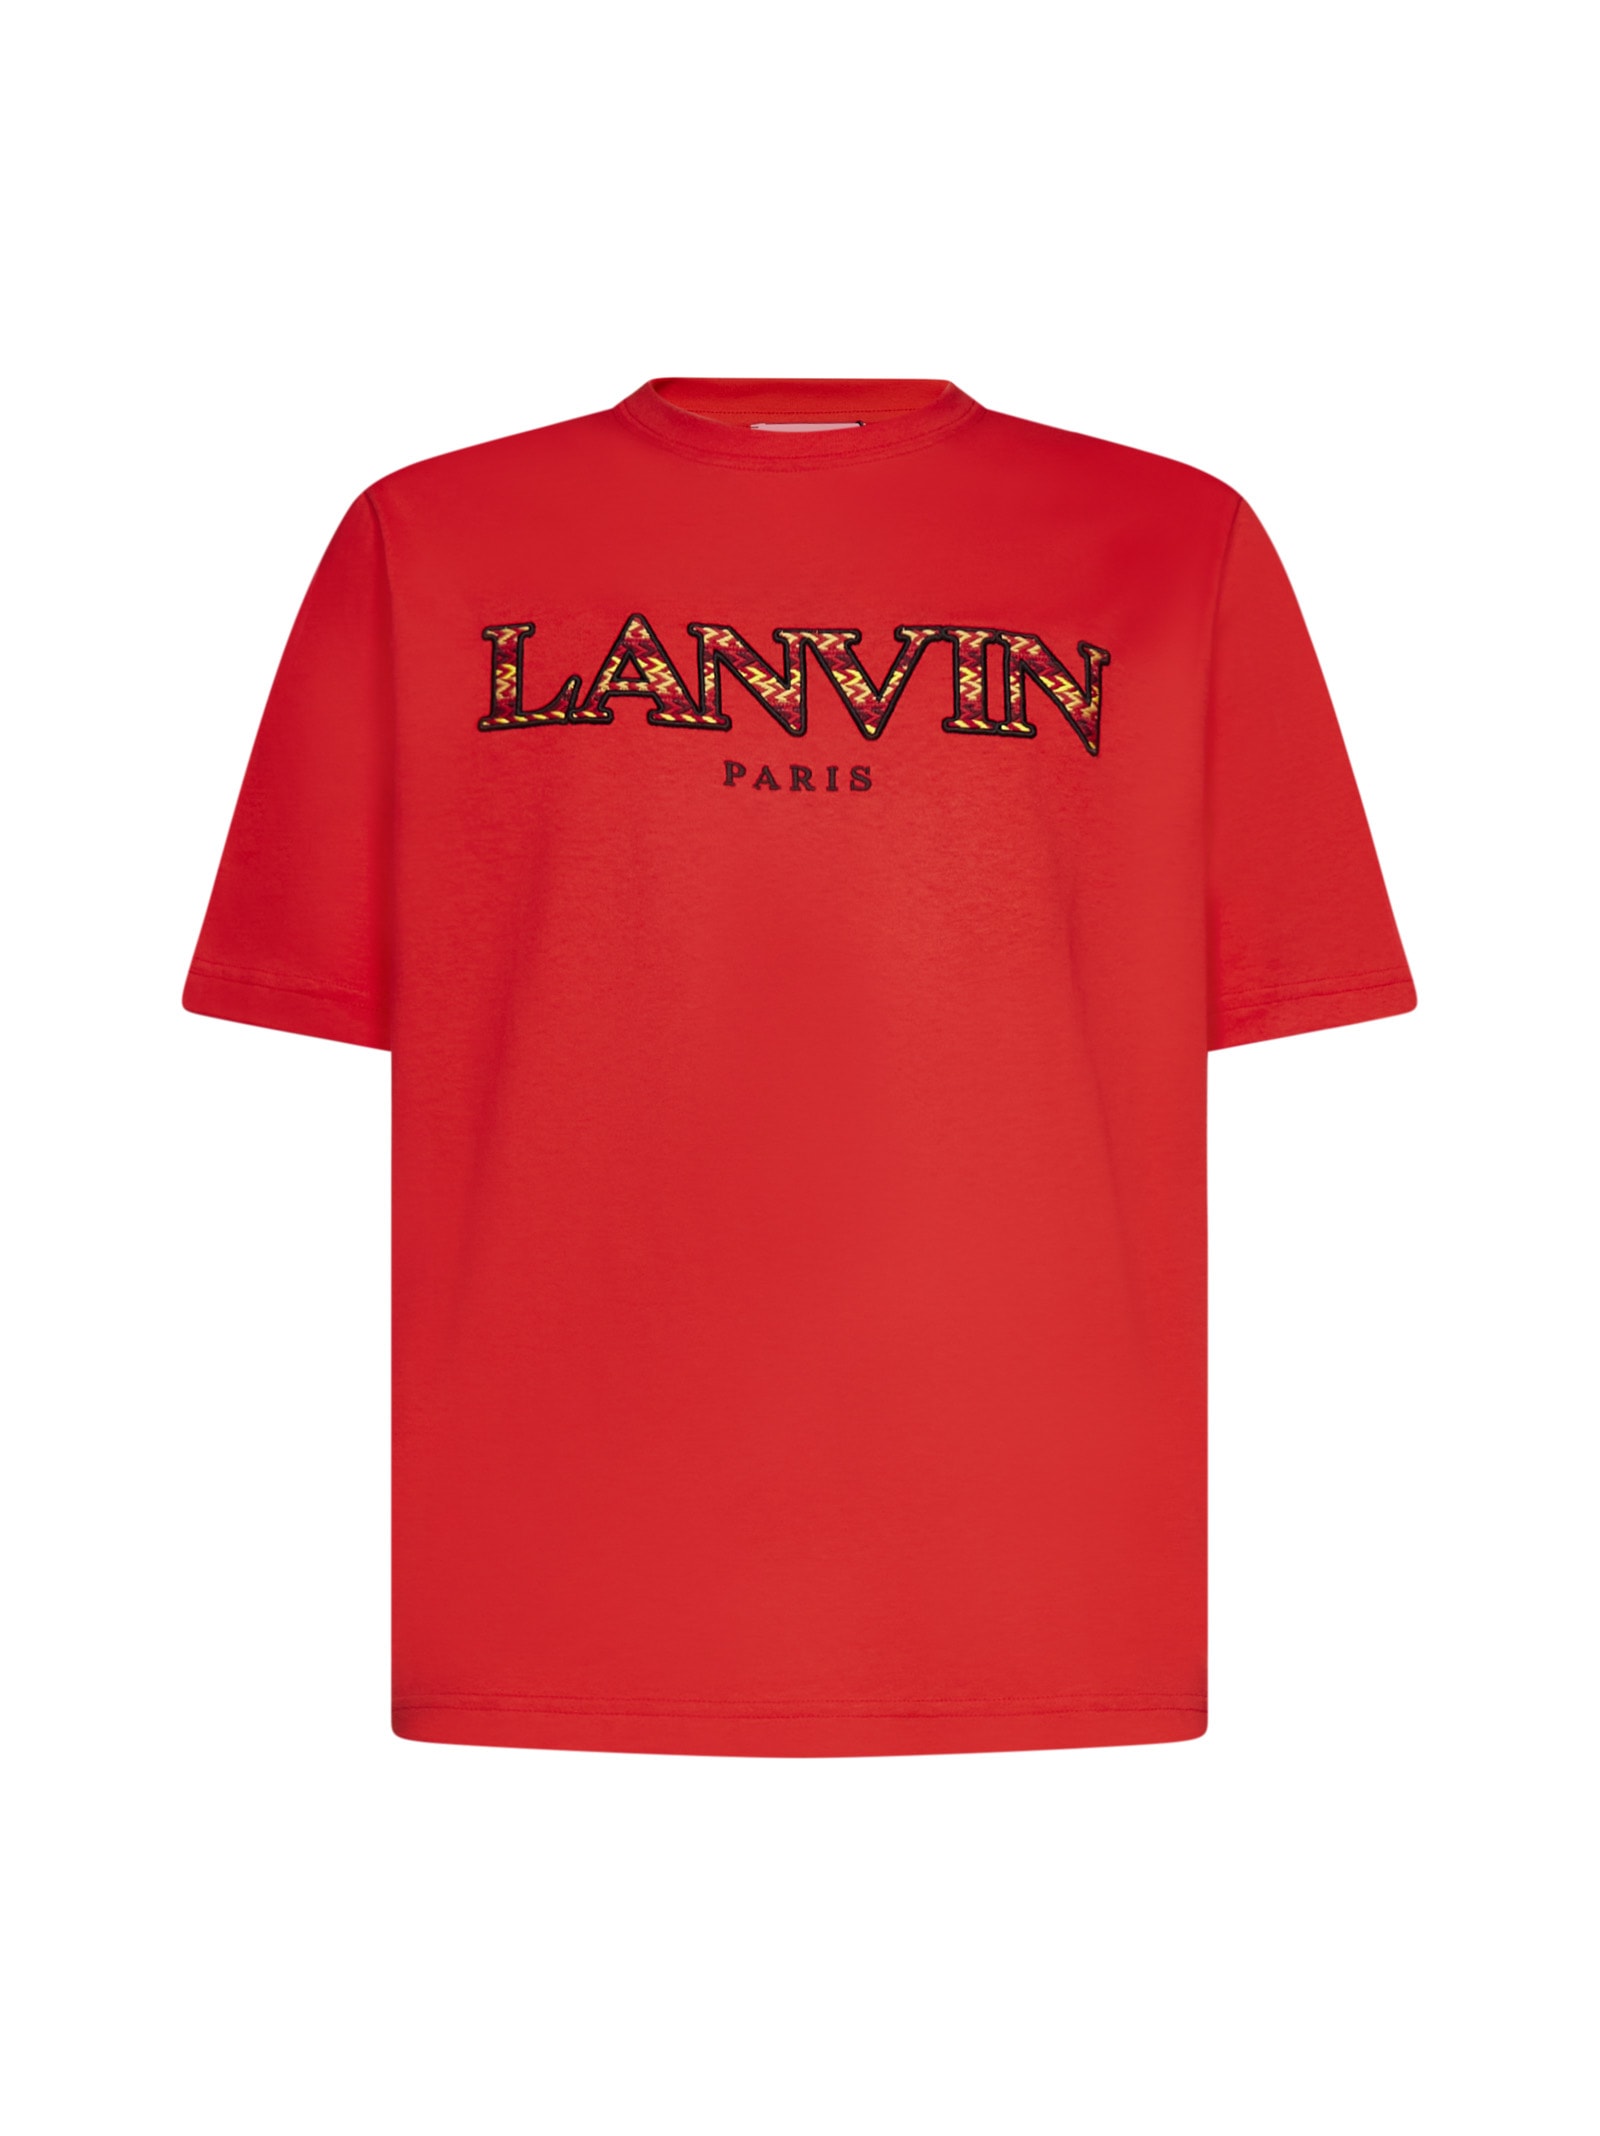 LANVIN T-Shirts for Men | ModeSens